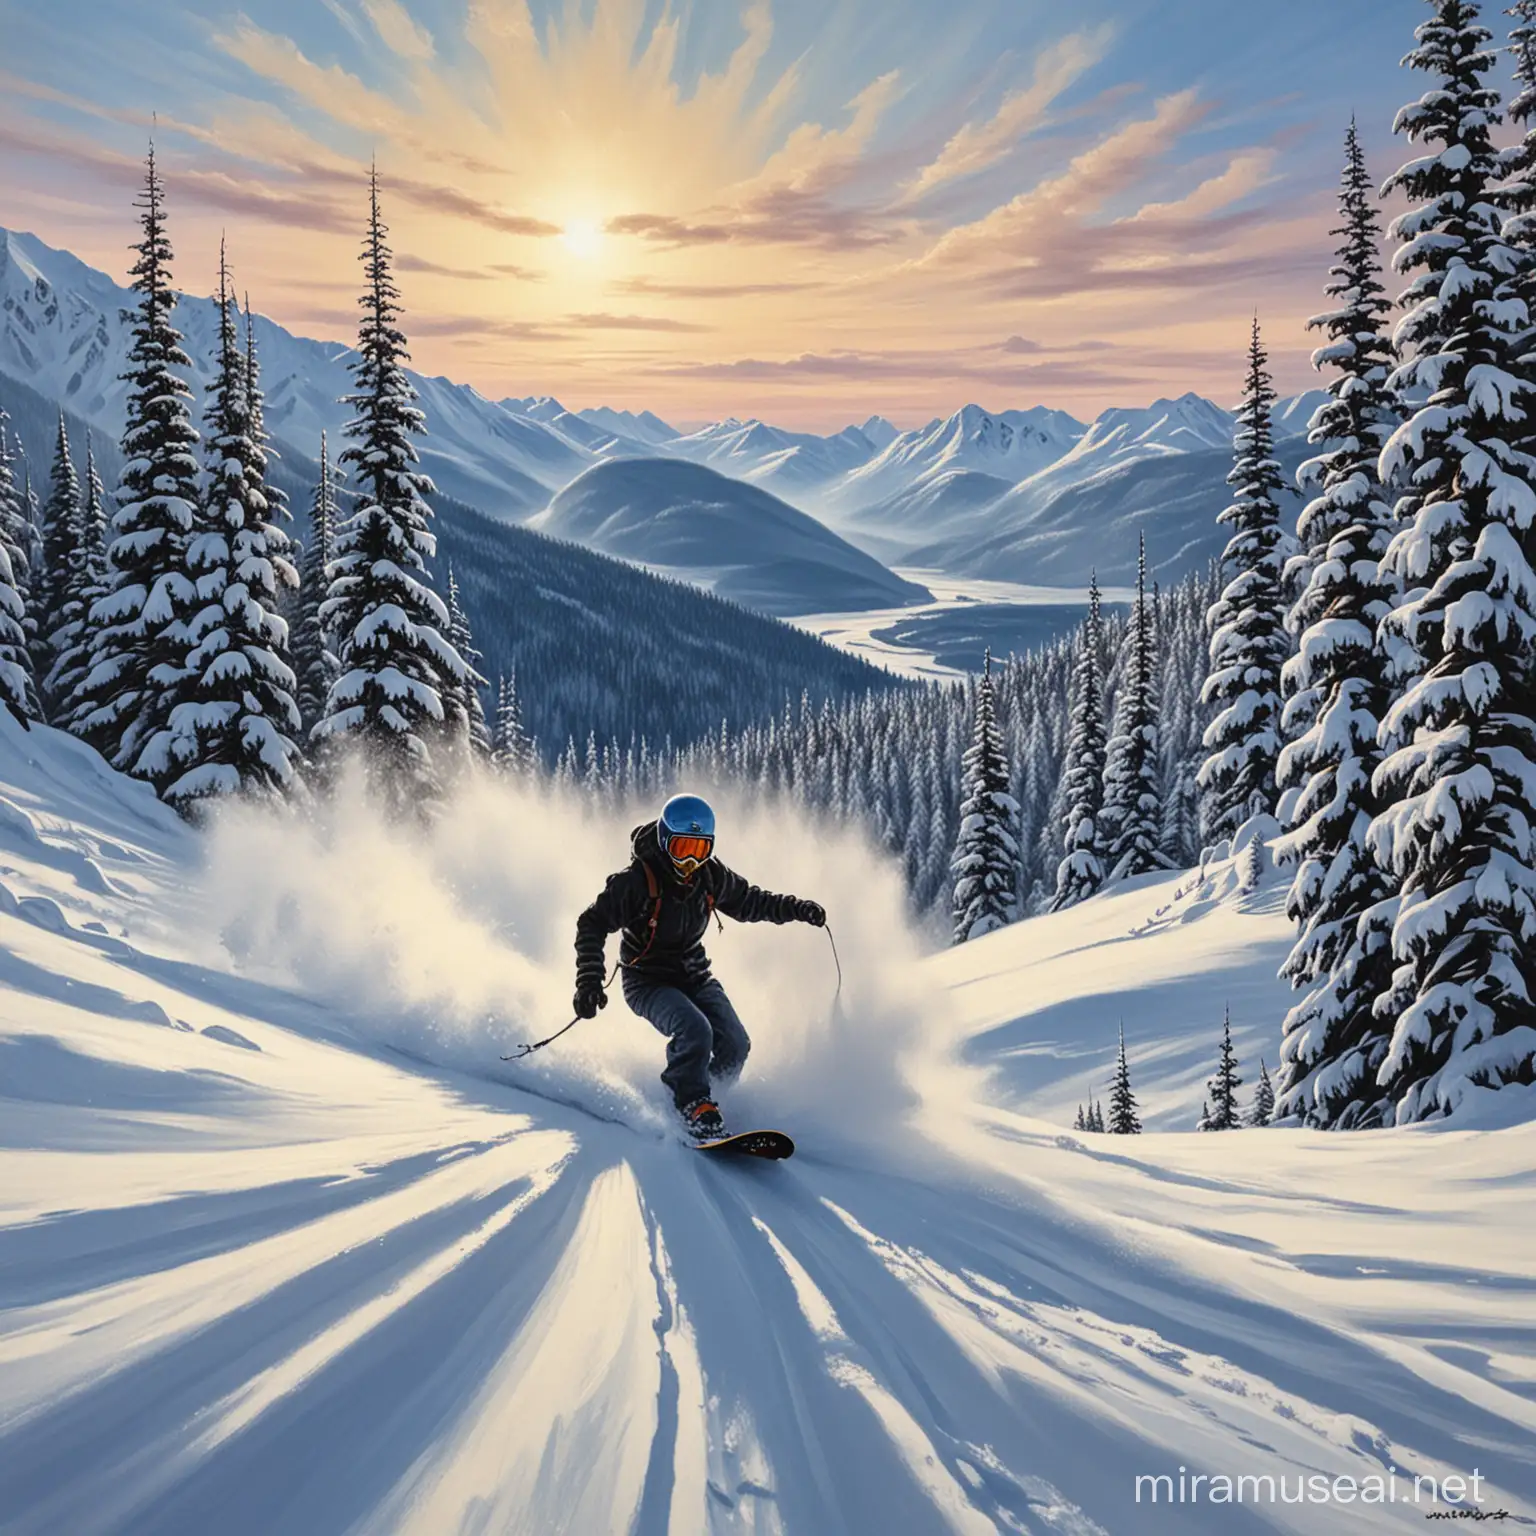 Snowboarding at Revelstoke mountain resort oil painting 